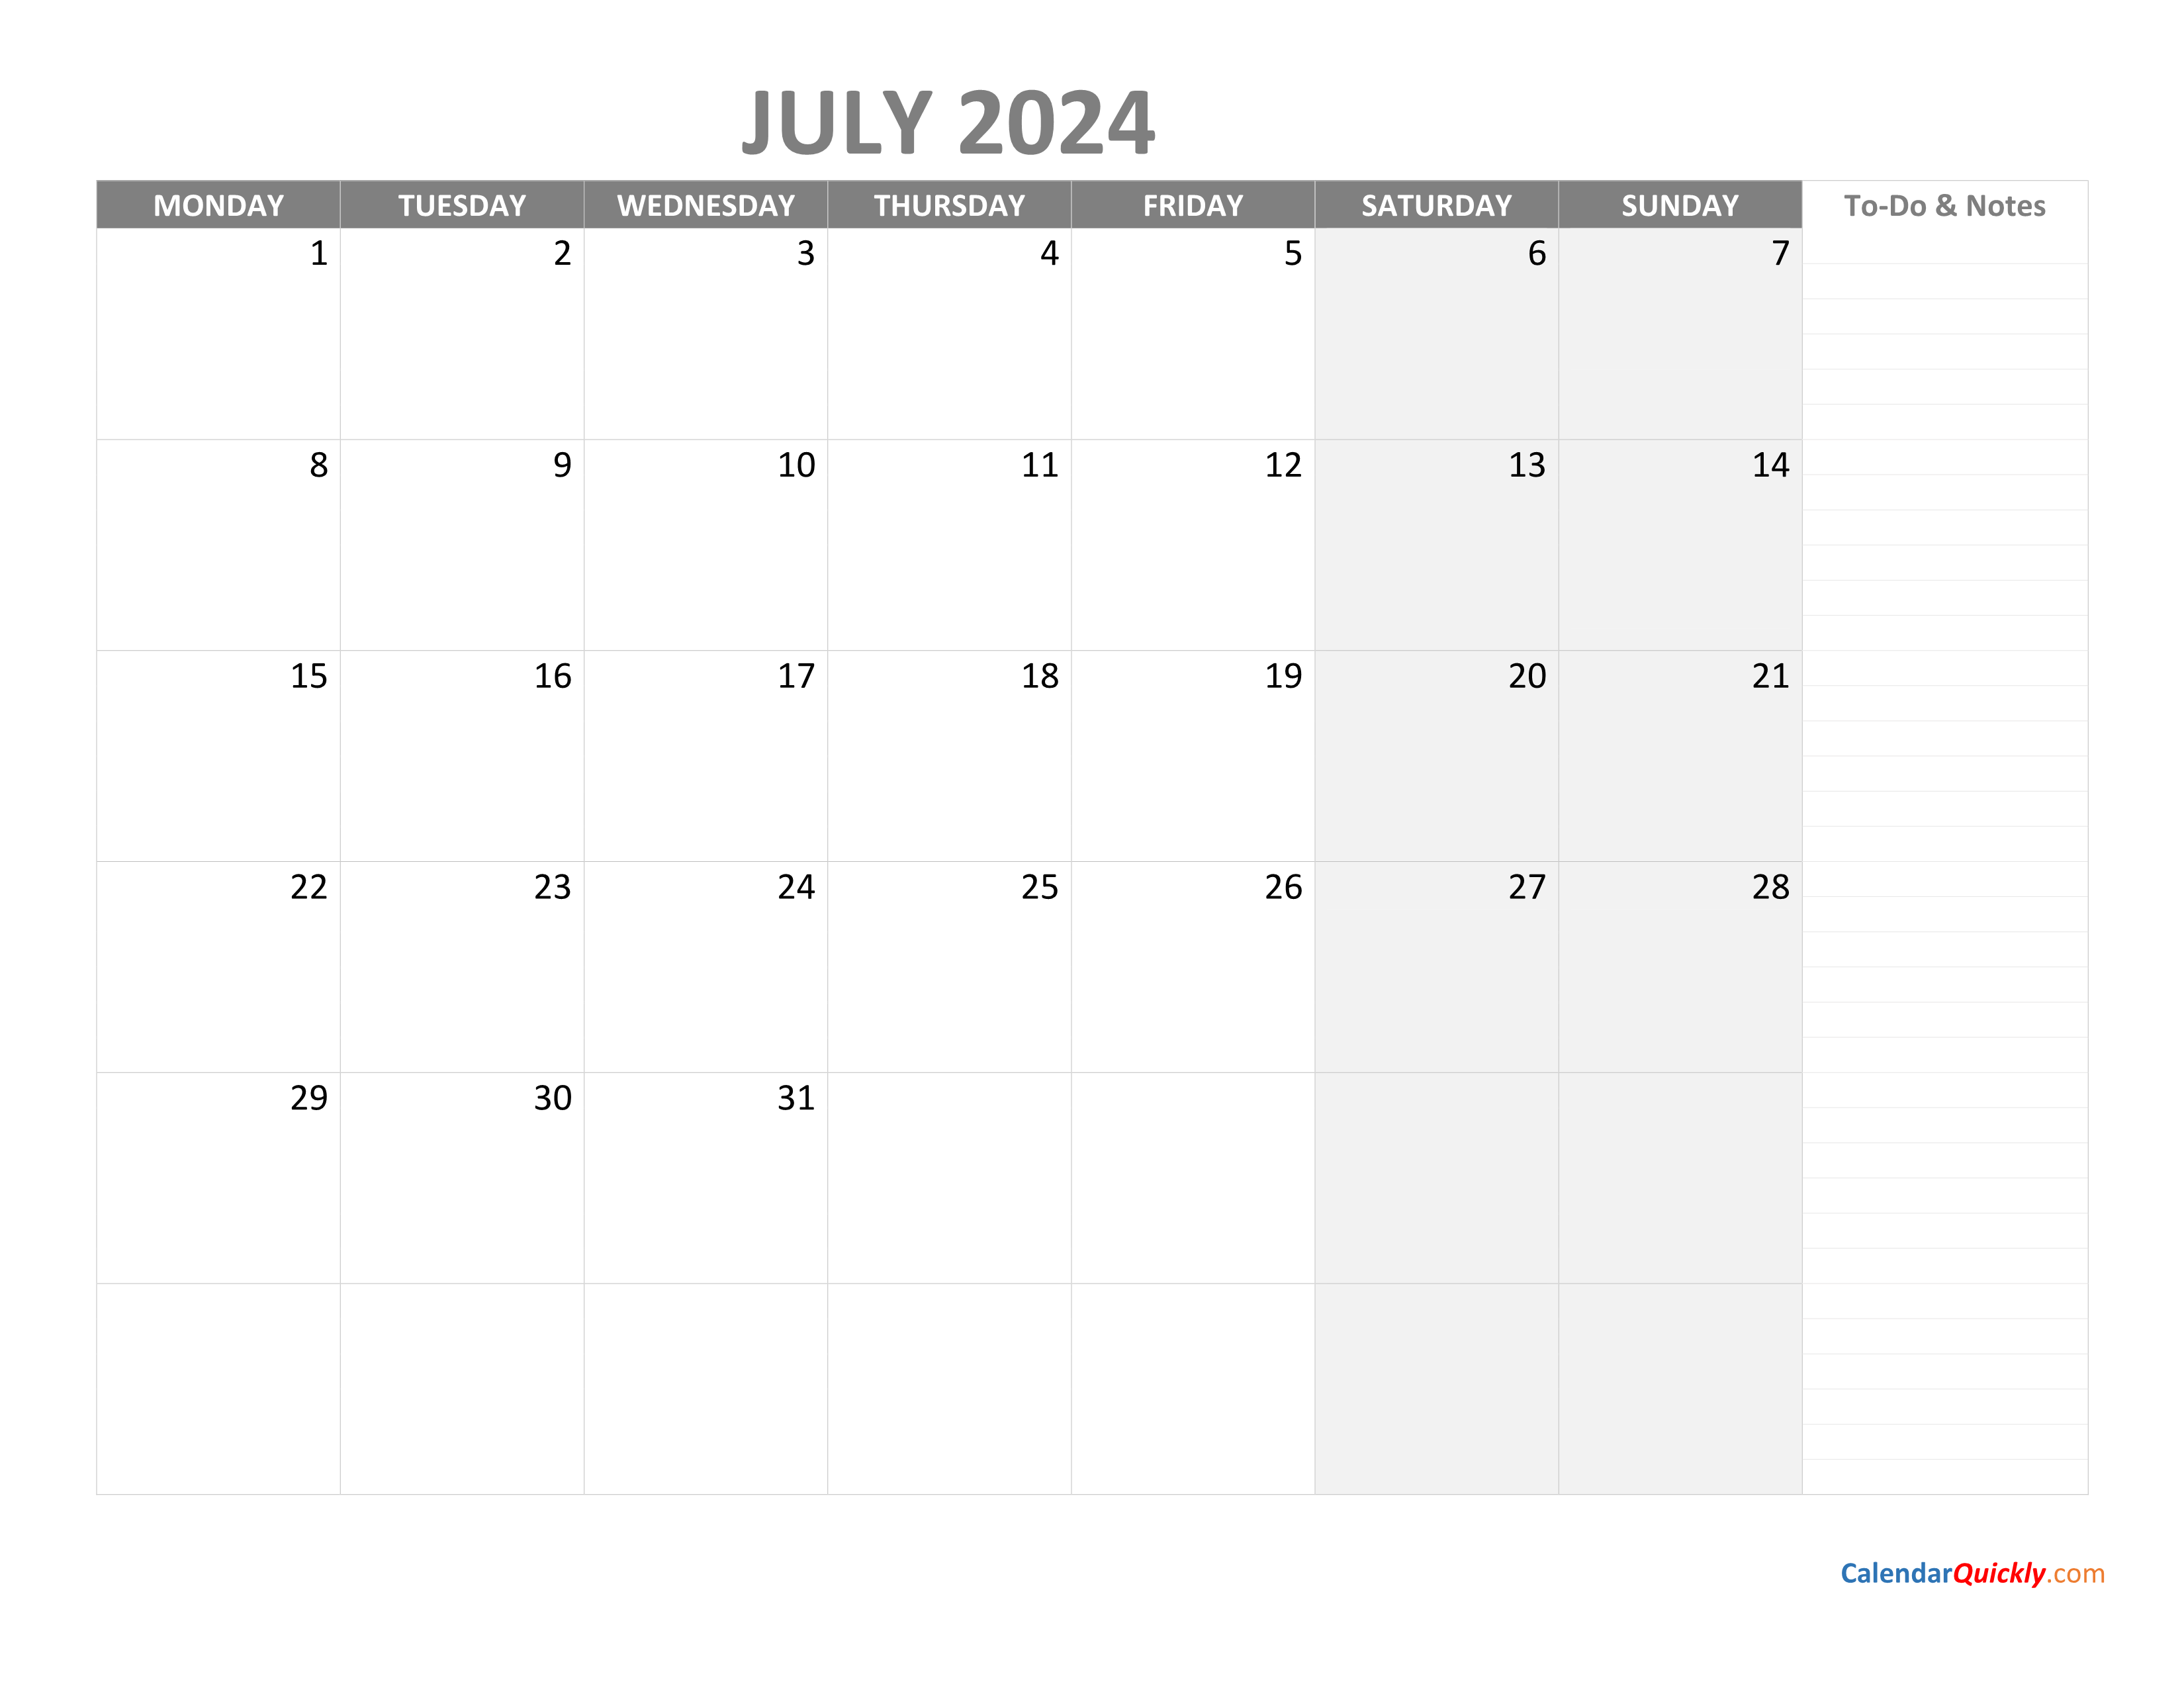 July Monday Calendar 2024 with Notes Calendar Quickly